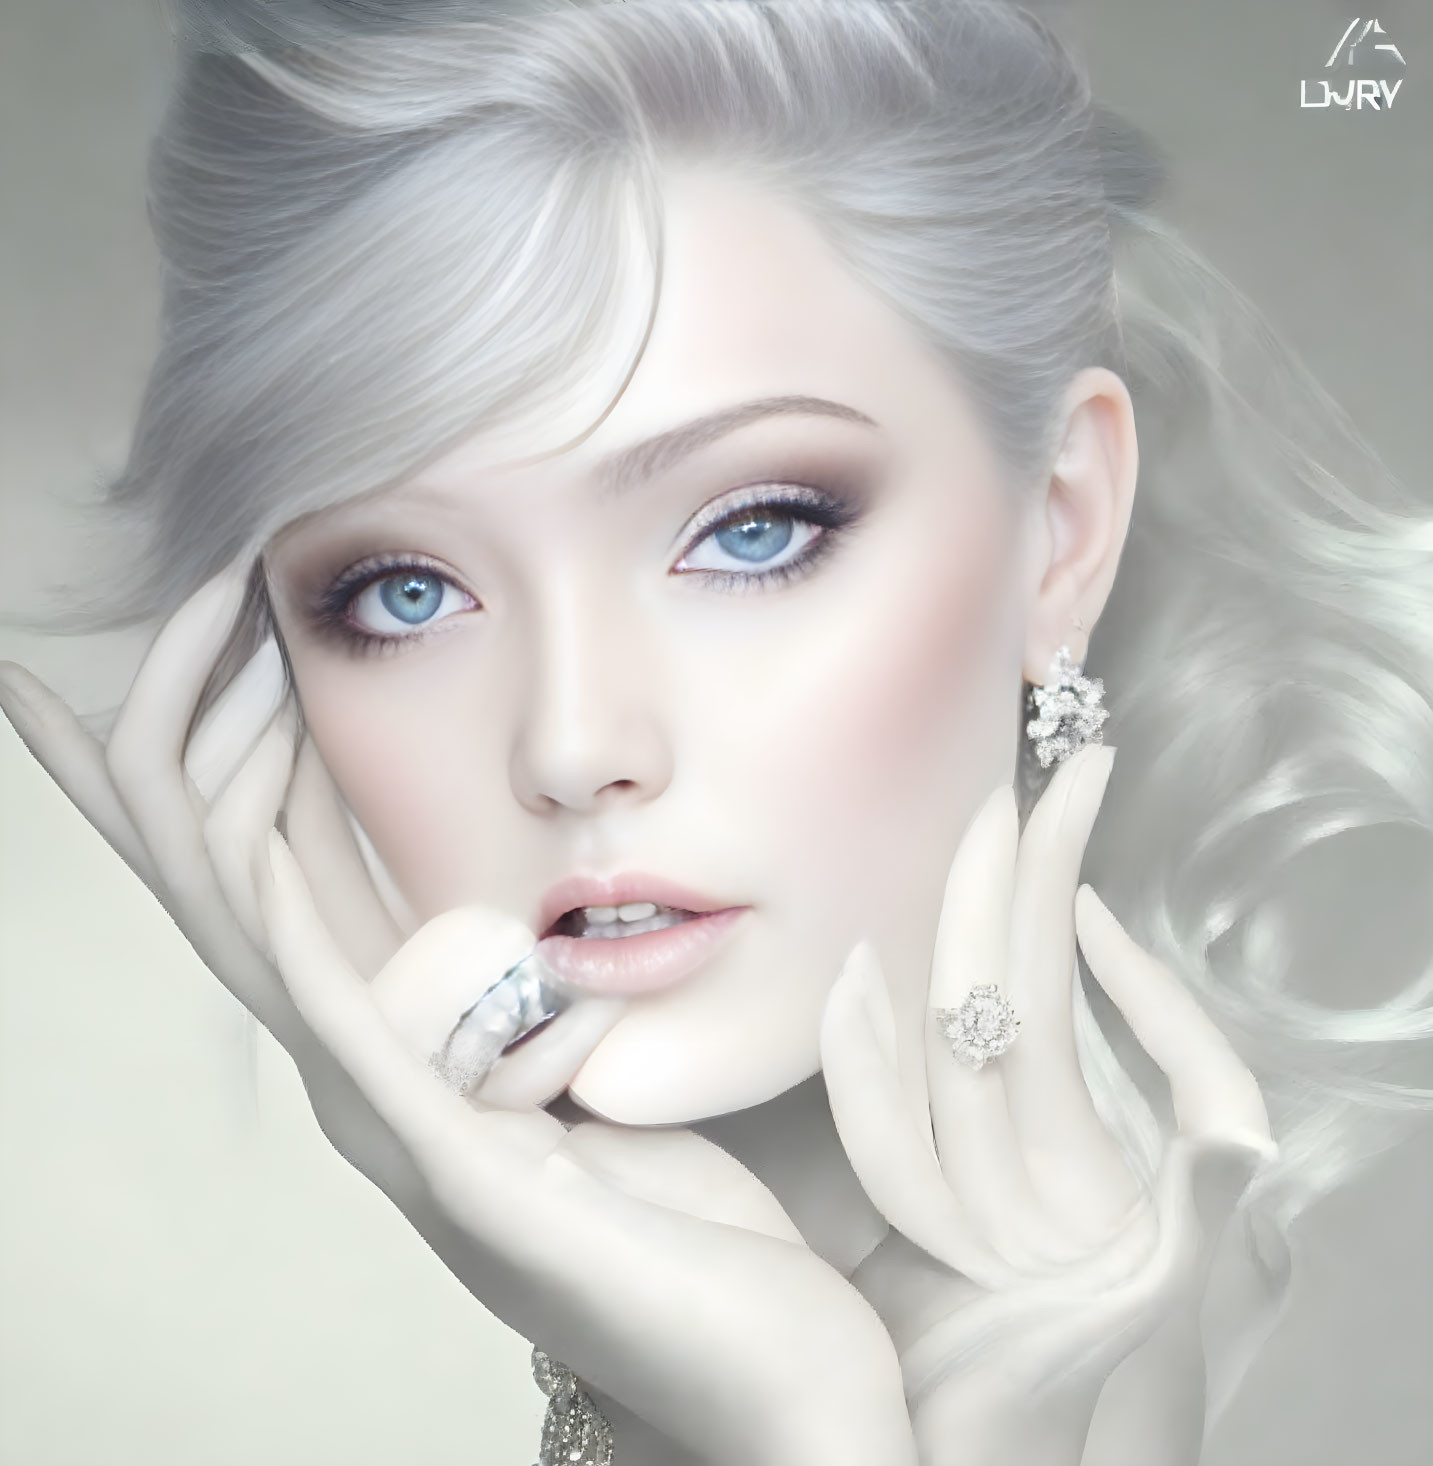 Digital art portrait: Woman with blue eyes, silver hair, and elegant jewelry in fantasy or high-fashion